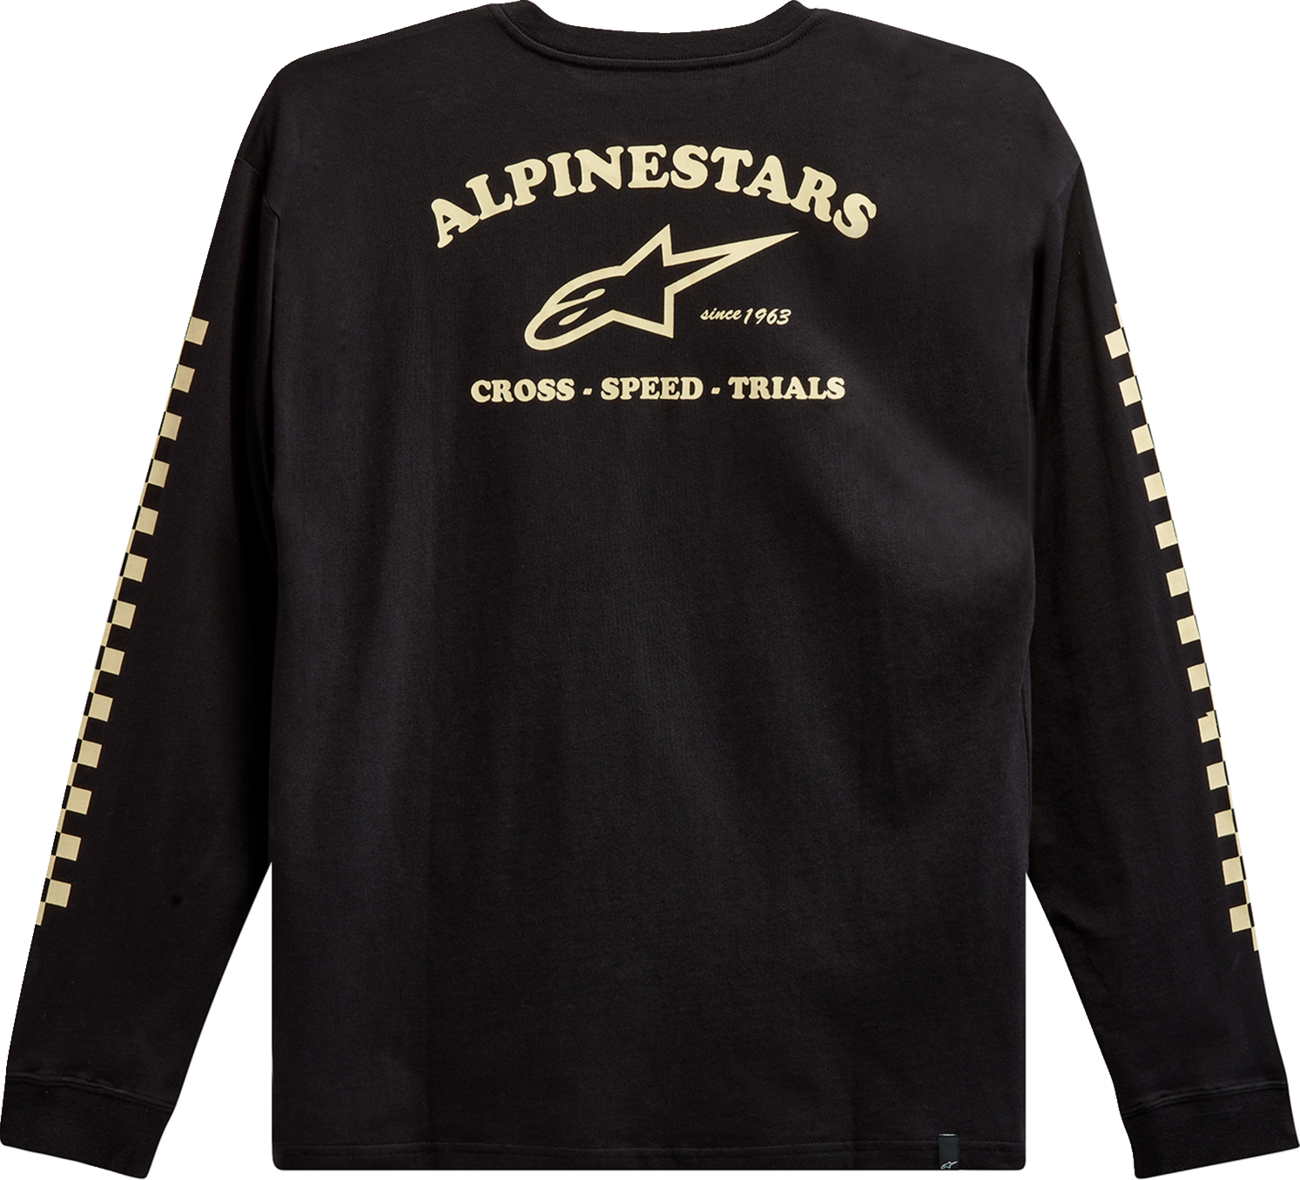 ALPINESTARS Sunday Long-Sleeve T-Shirt - Black - Medium 12137184010M